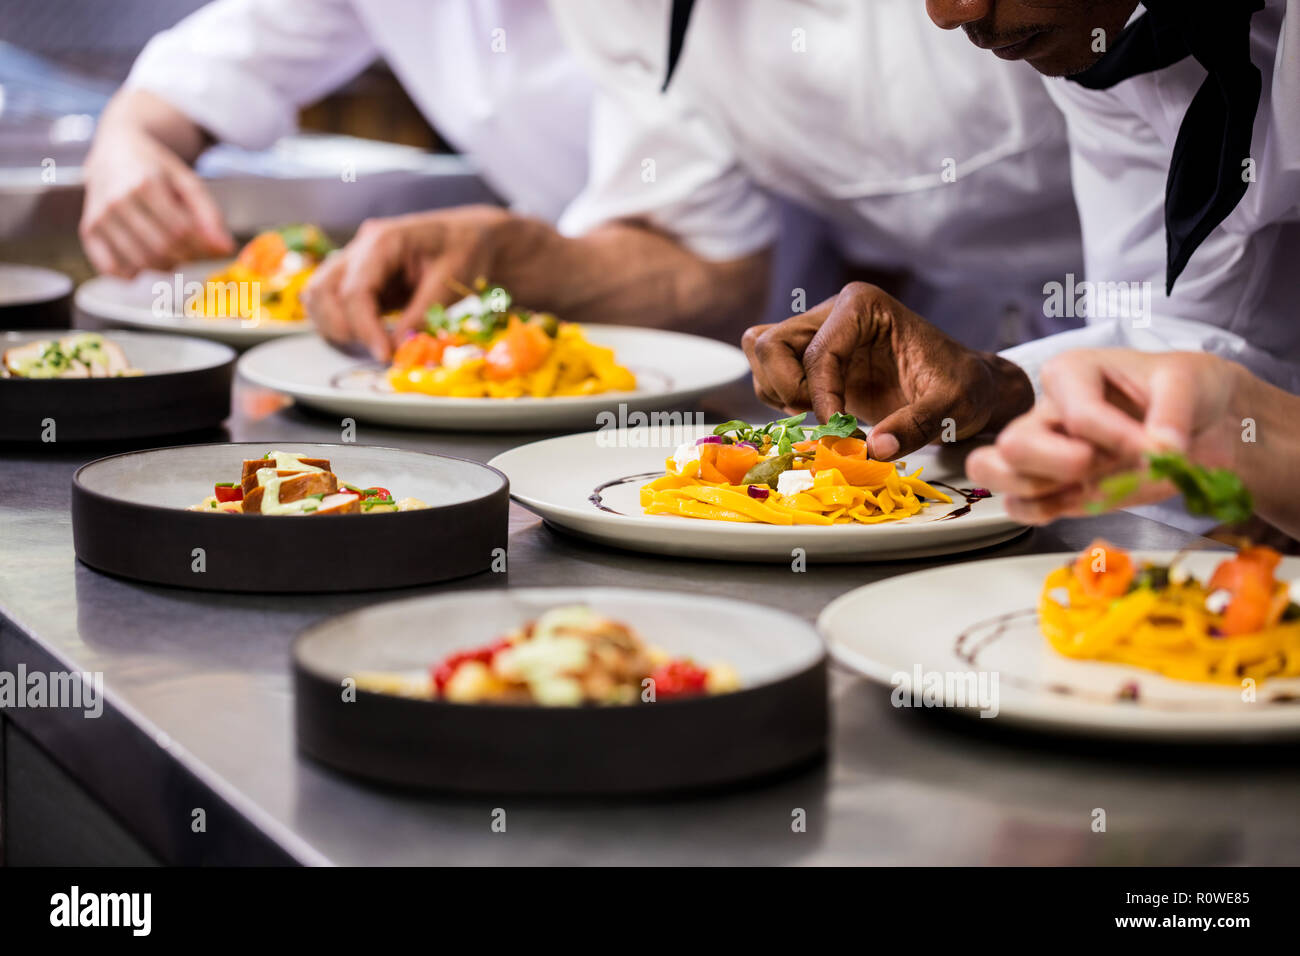 Chef garnishing food on plates Stock Photo